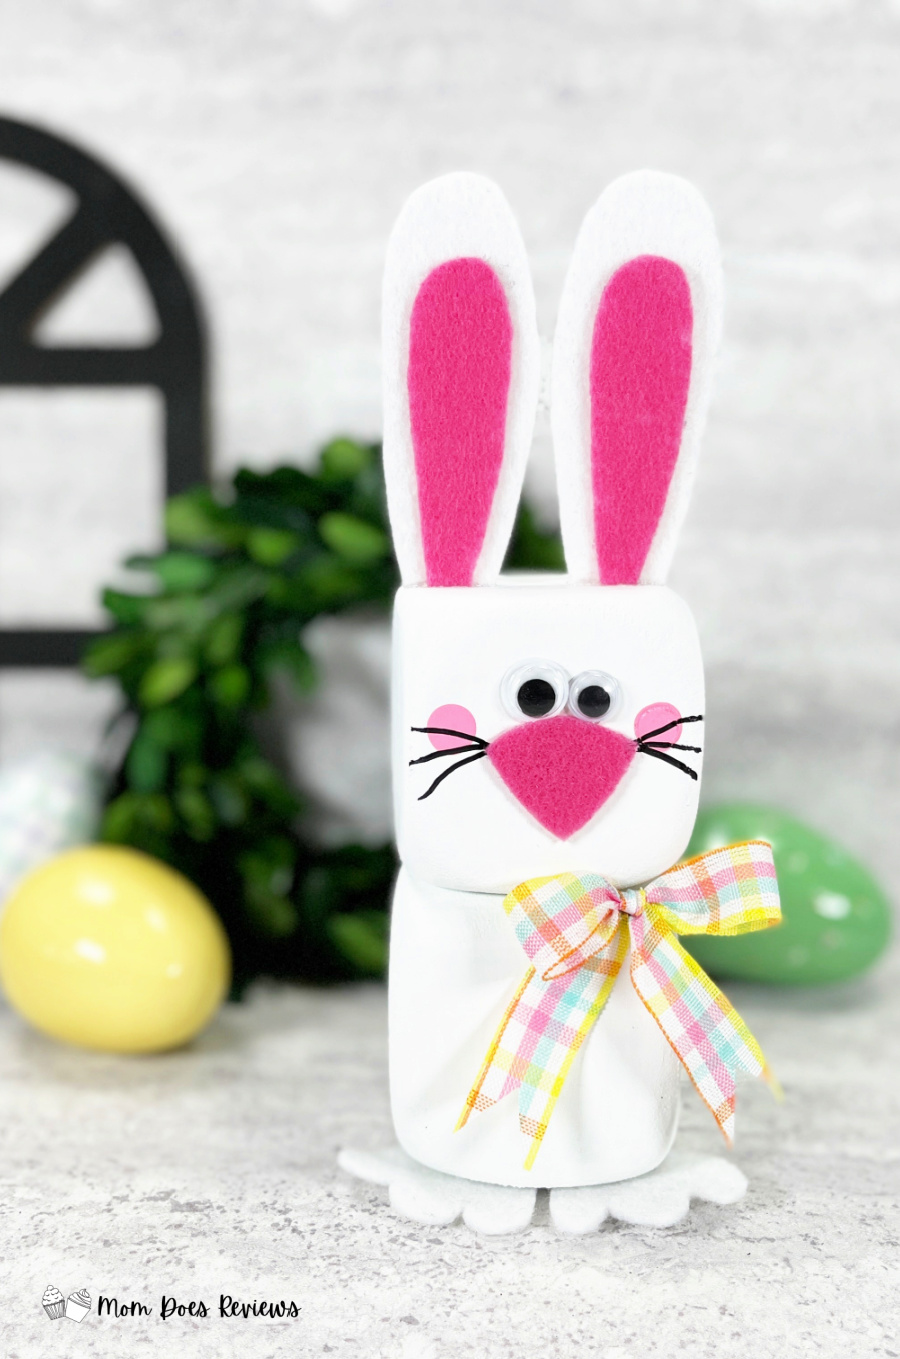 Make a Foam Dice Bunny - An Easy Dollar Store Craft